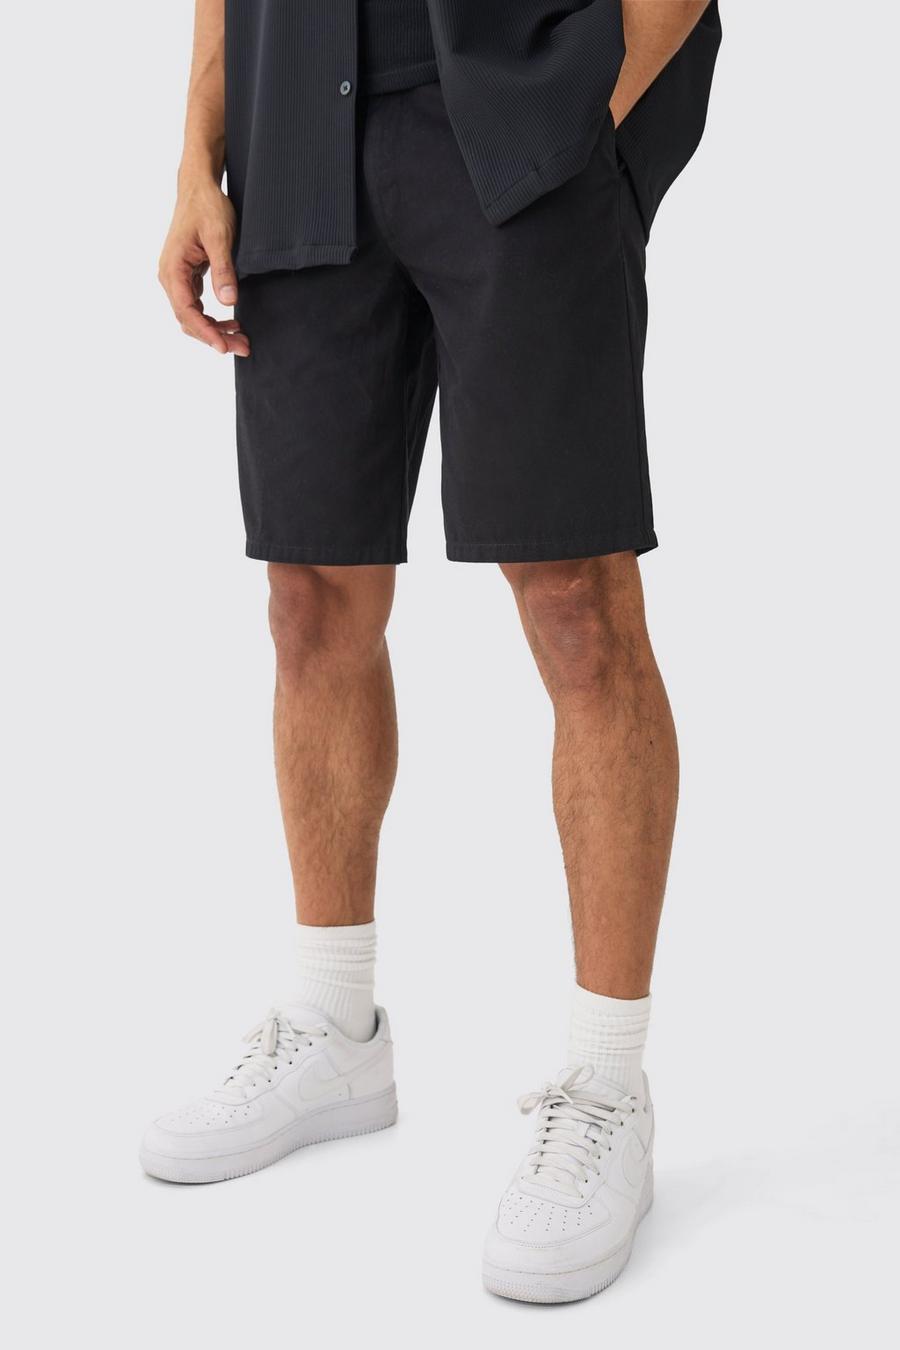 Lockere schwarze Shorts, Black image number 1